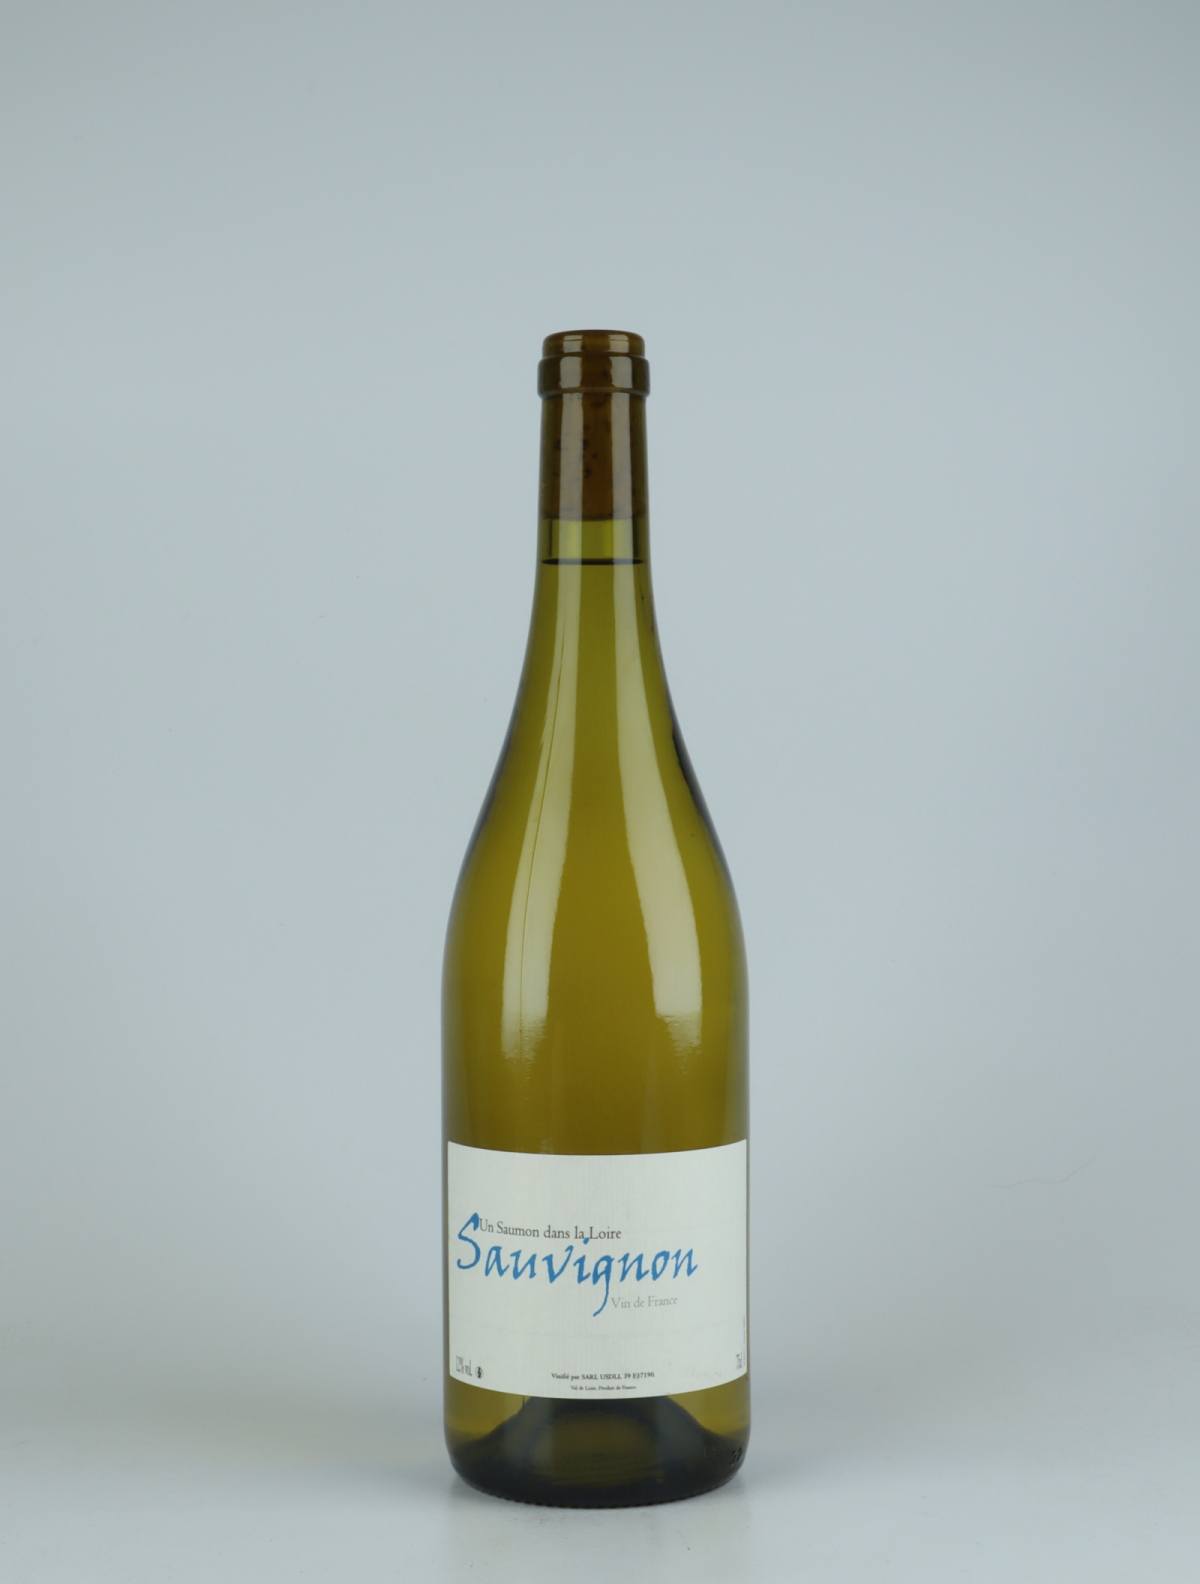 A bottle 2021 Sauvignon Blanc White wine from Frantz Saumon, Loire in France